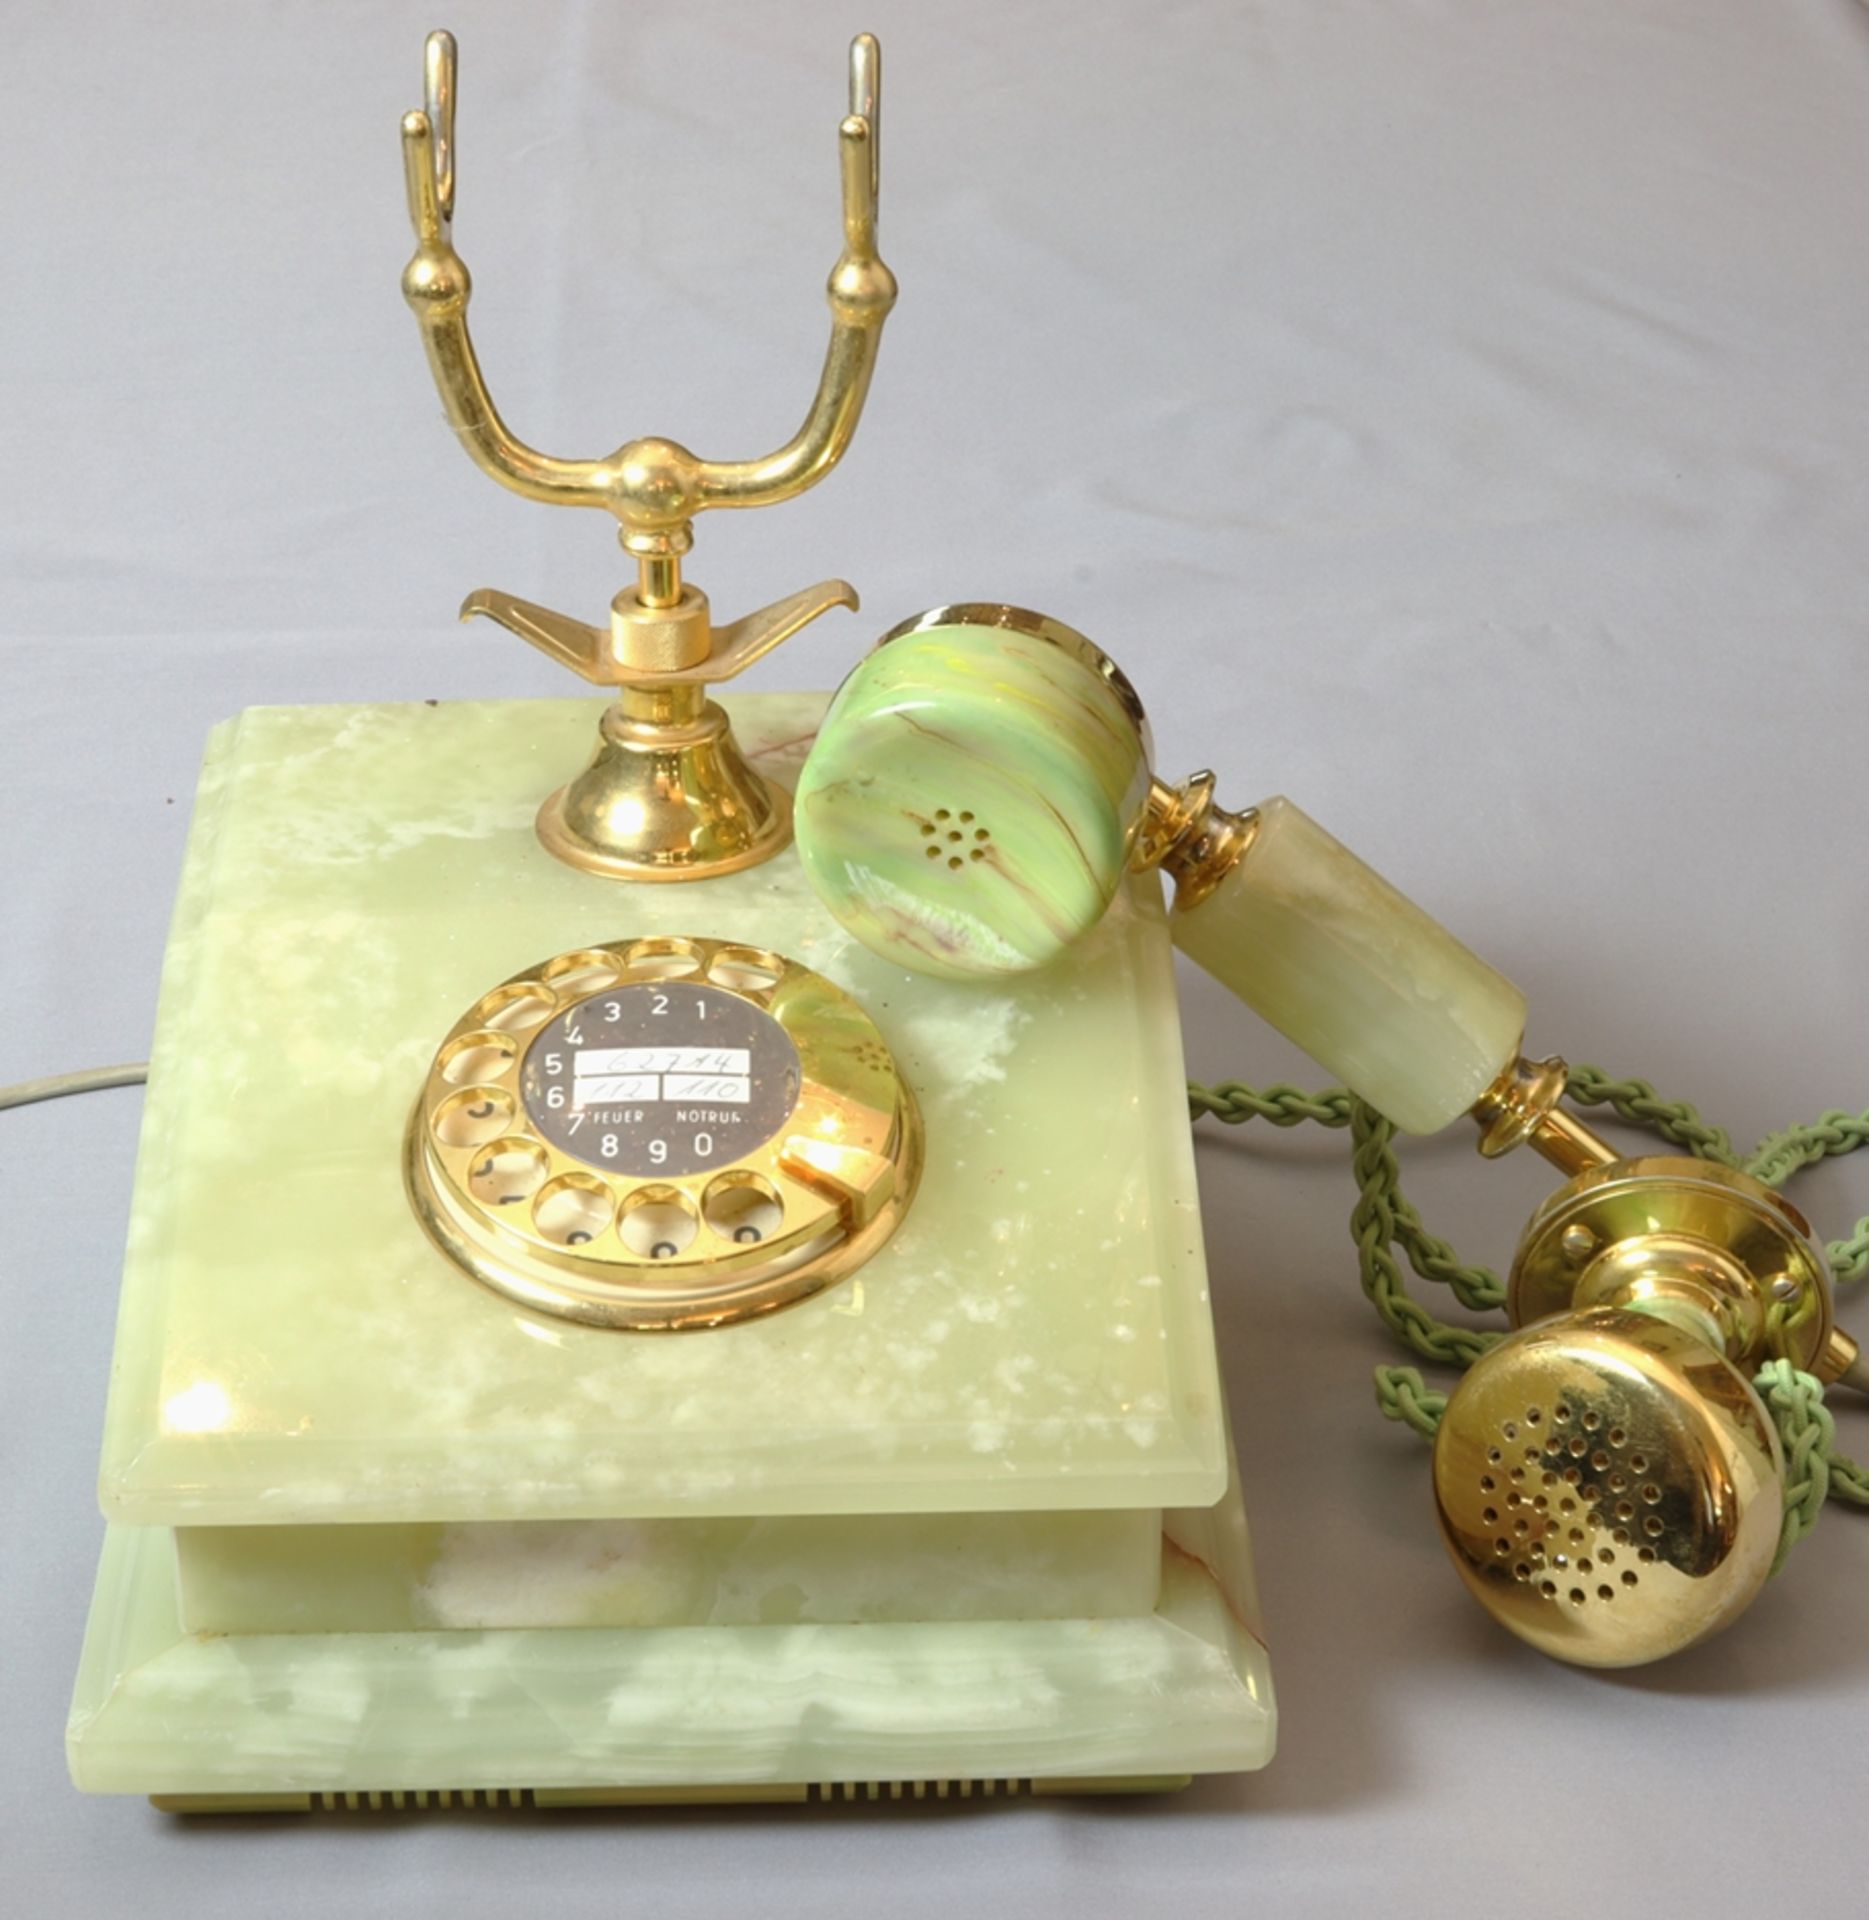 Nostalgie - Telefon neuzeitlich in Marmoroptik - Image 2 of 4